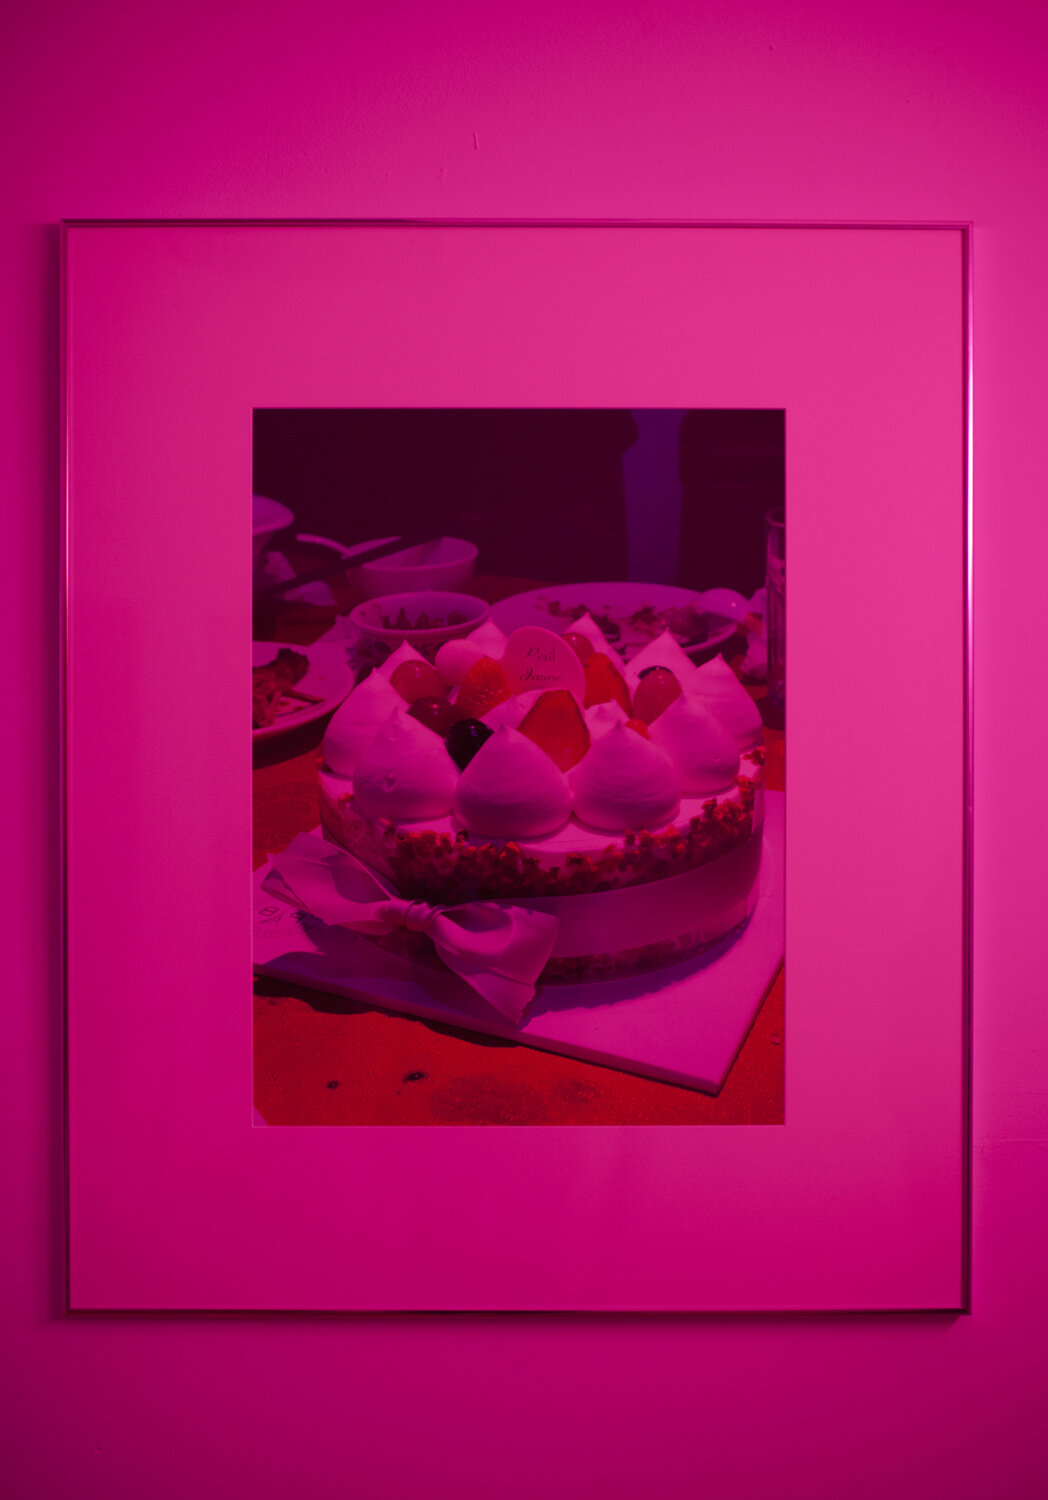   Birthday Cake , 2019. Archival pigment print. 37 x 30 inches. 